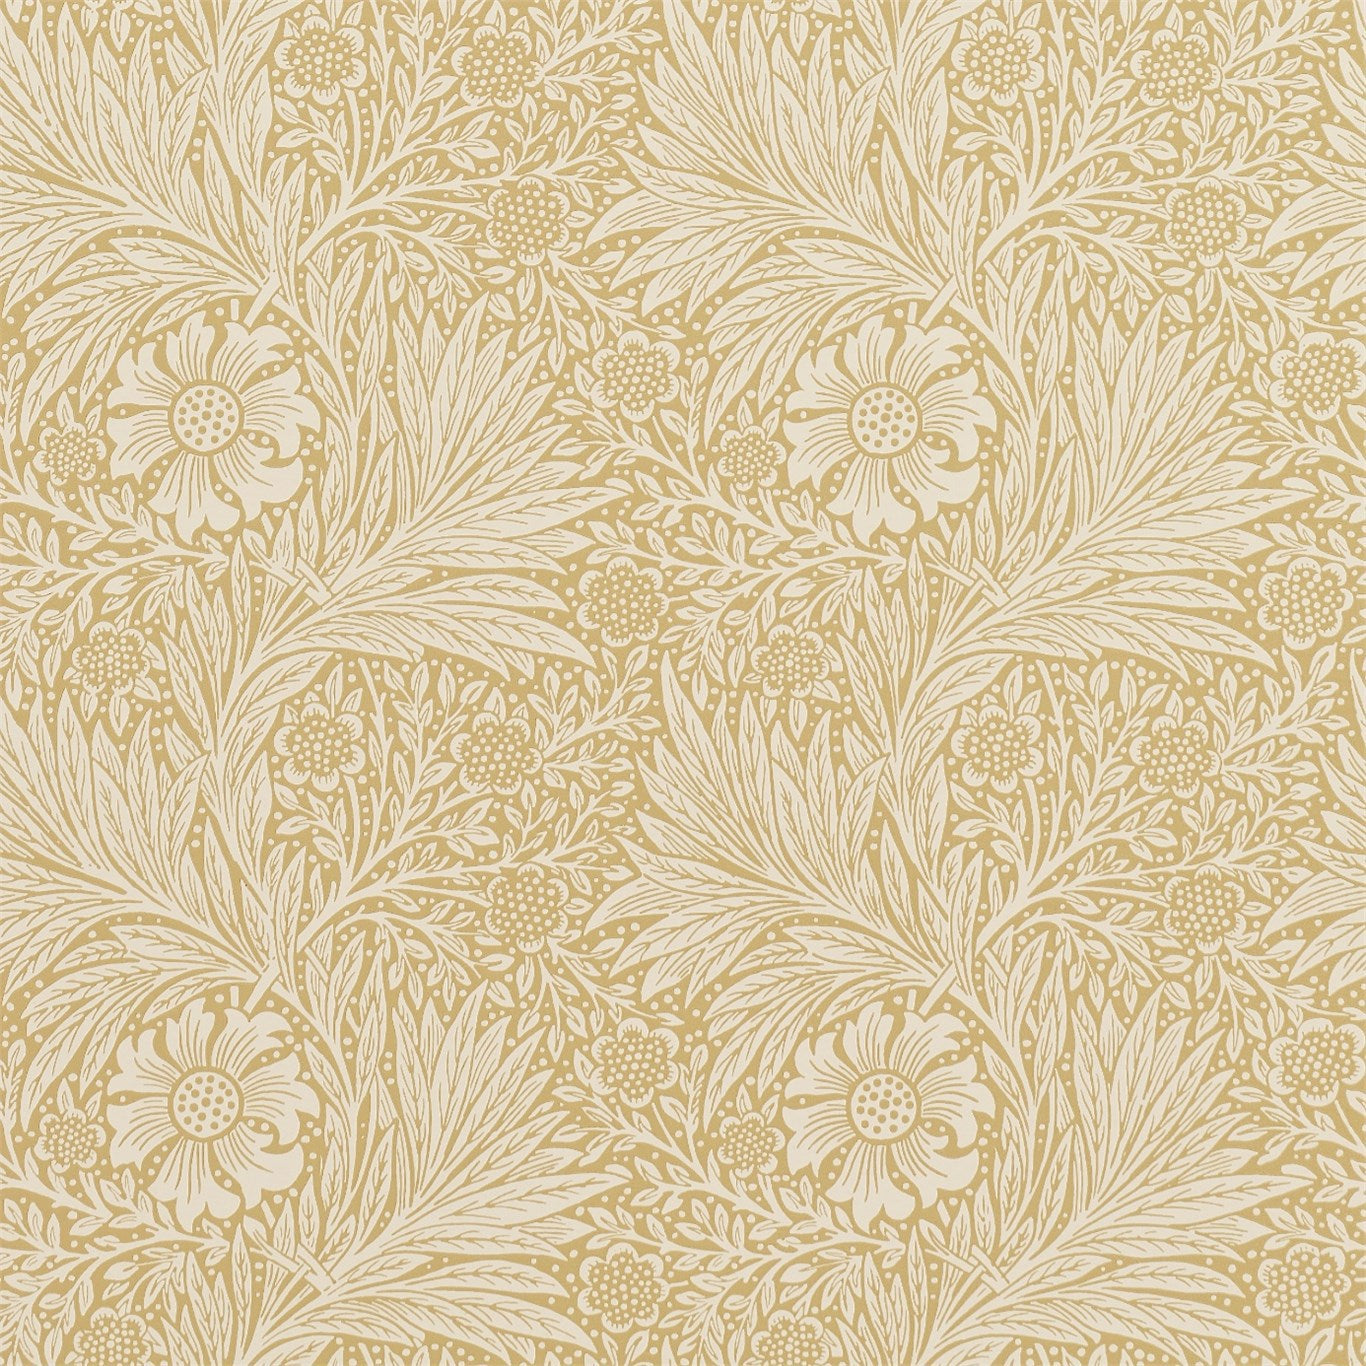 Marigold Wallpaper by Morris & Co.